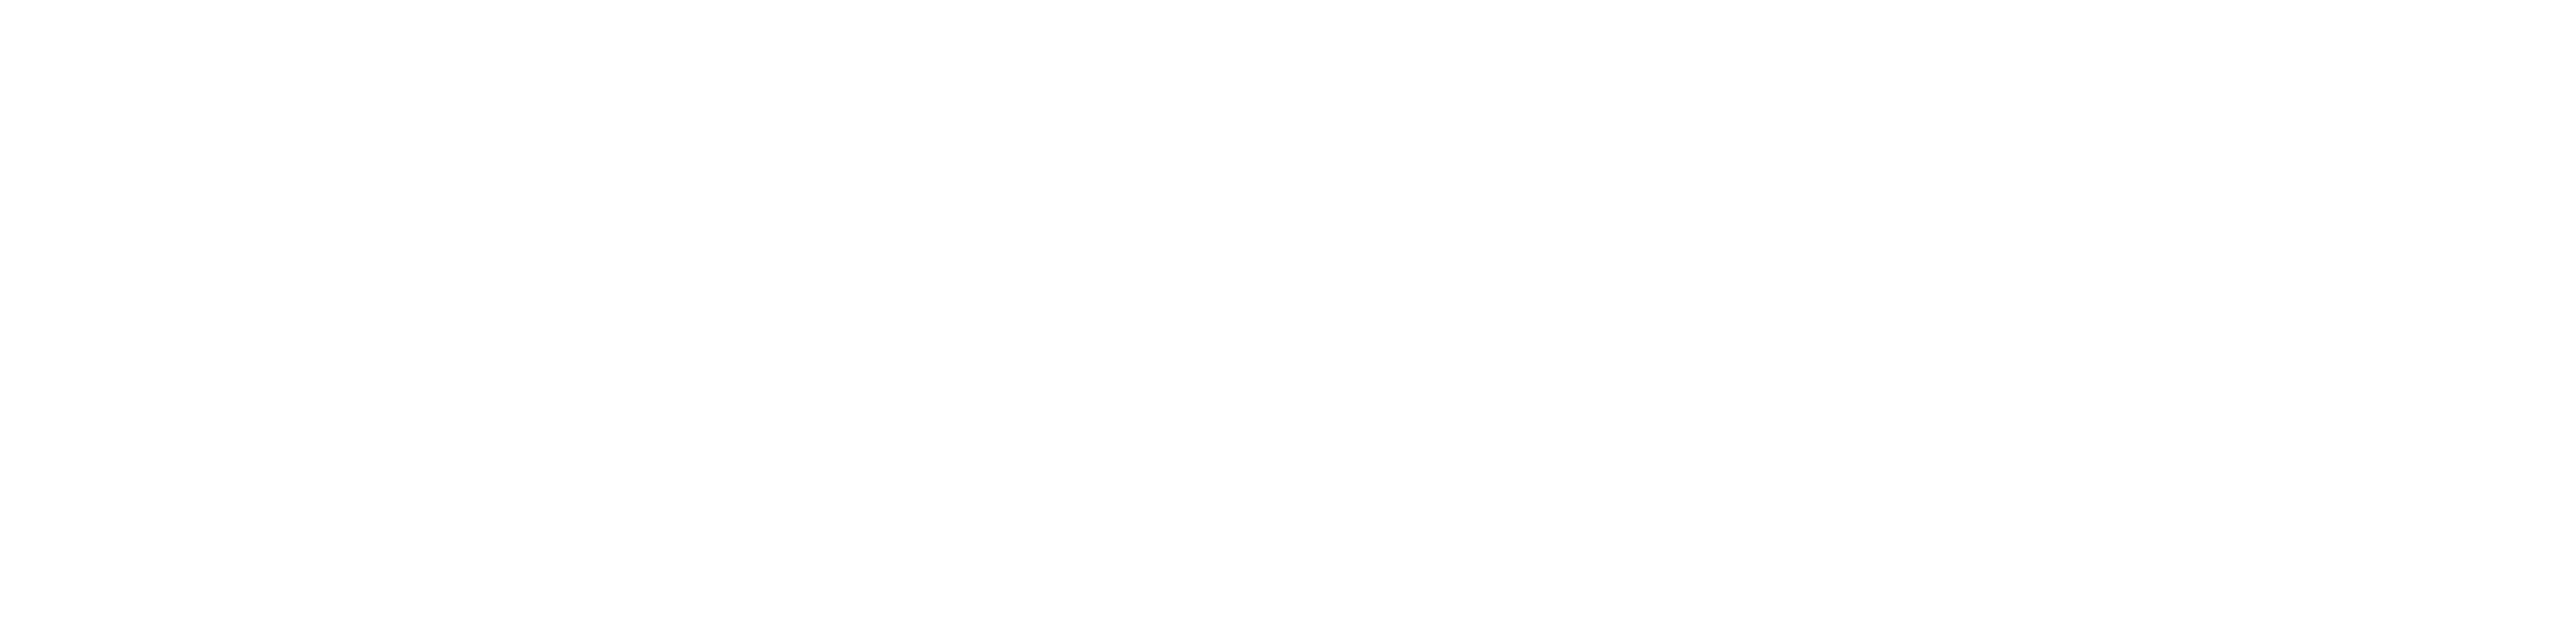 Berks Headshots | Professional Headshot studio near Reading, PA